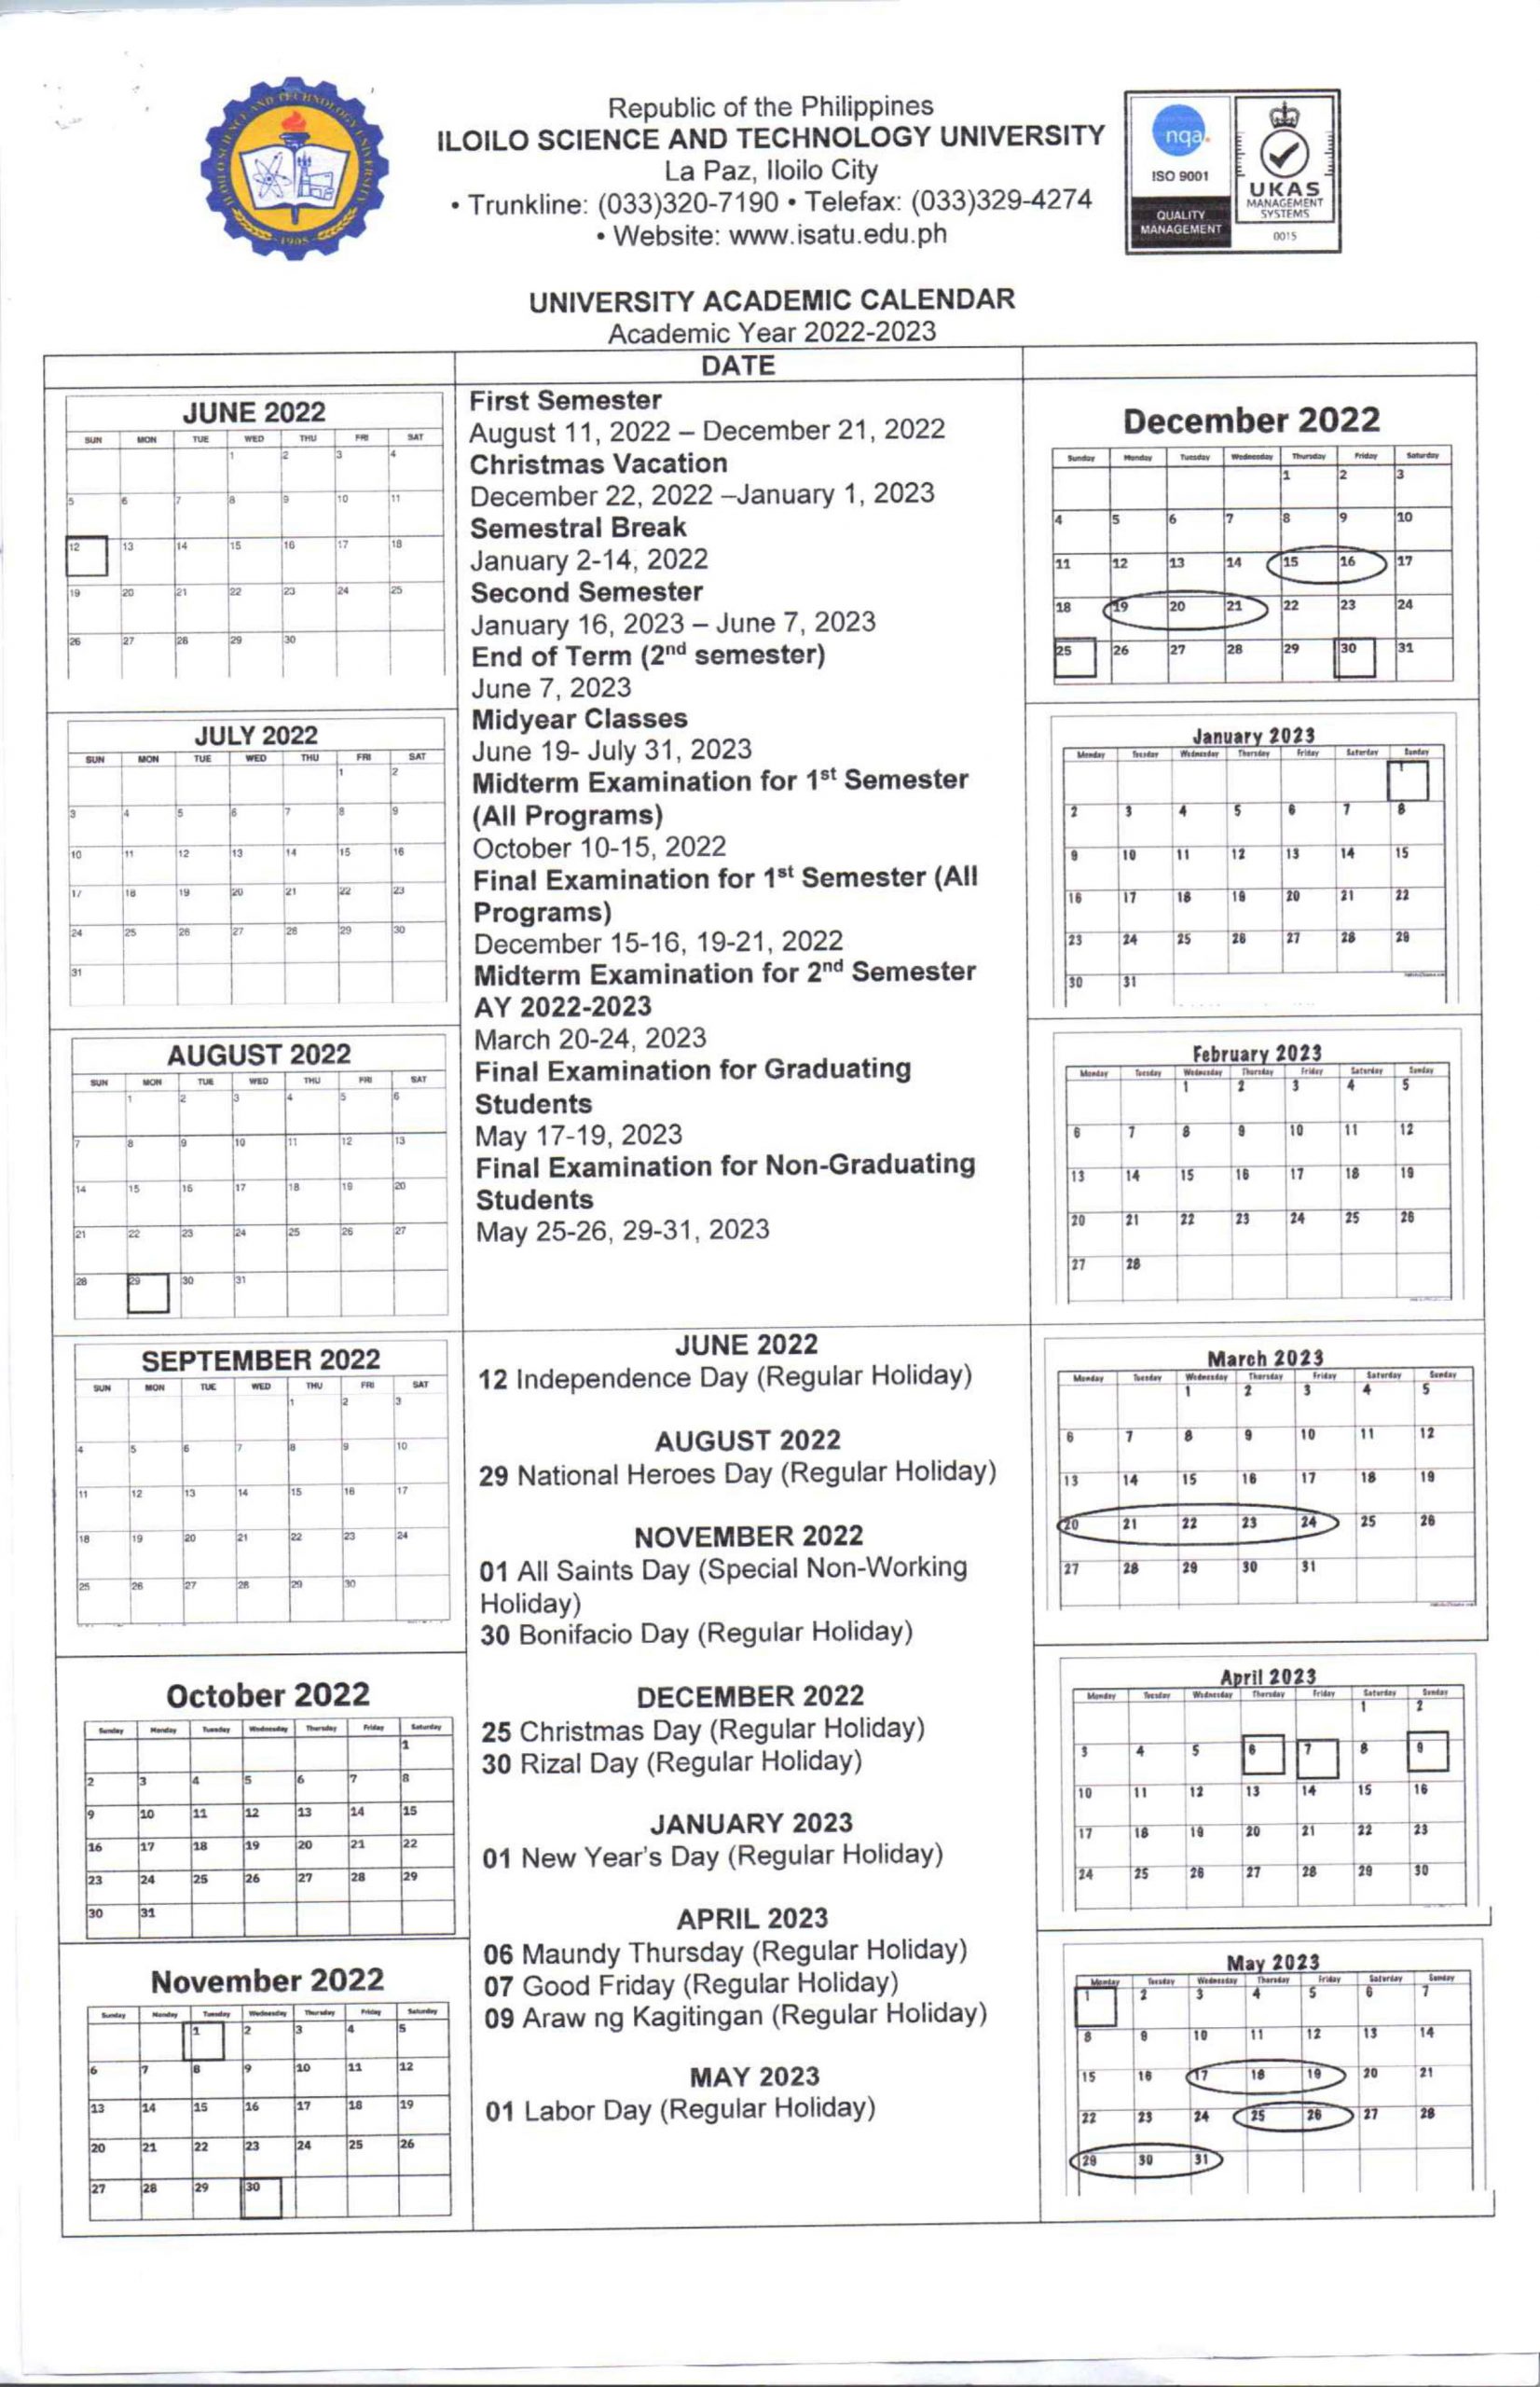 University Academic Calendar Iloilo Science and Technology University